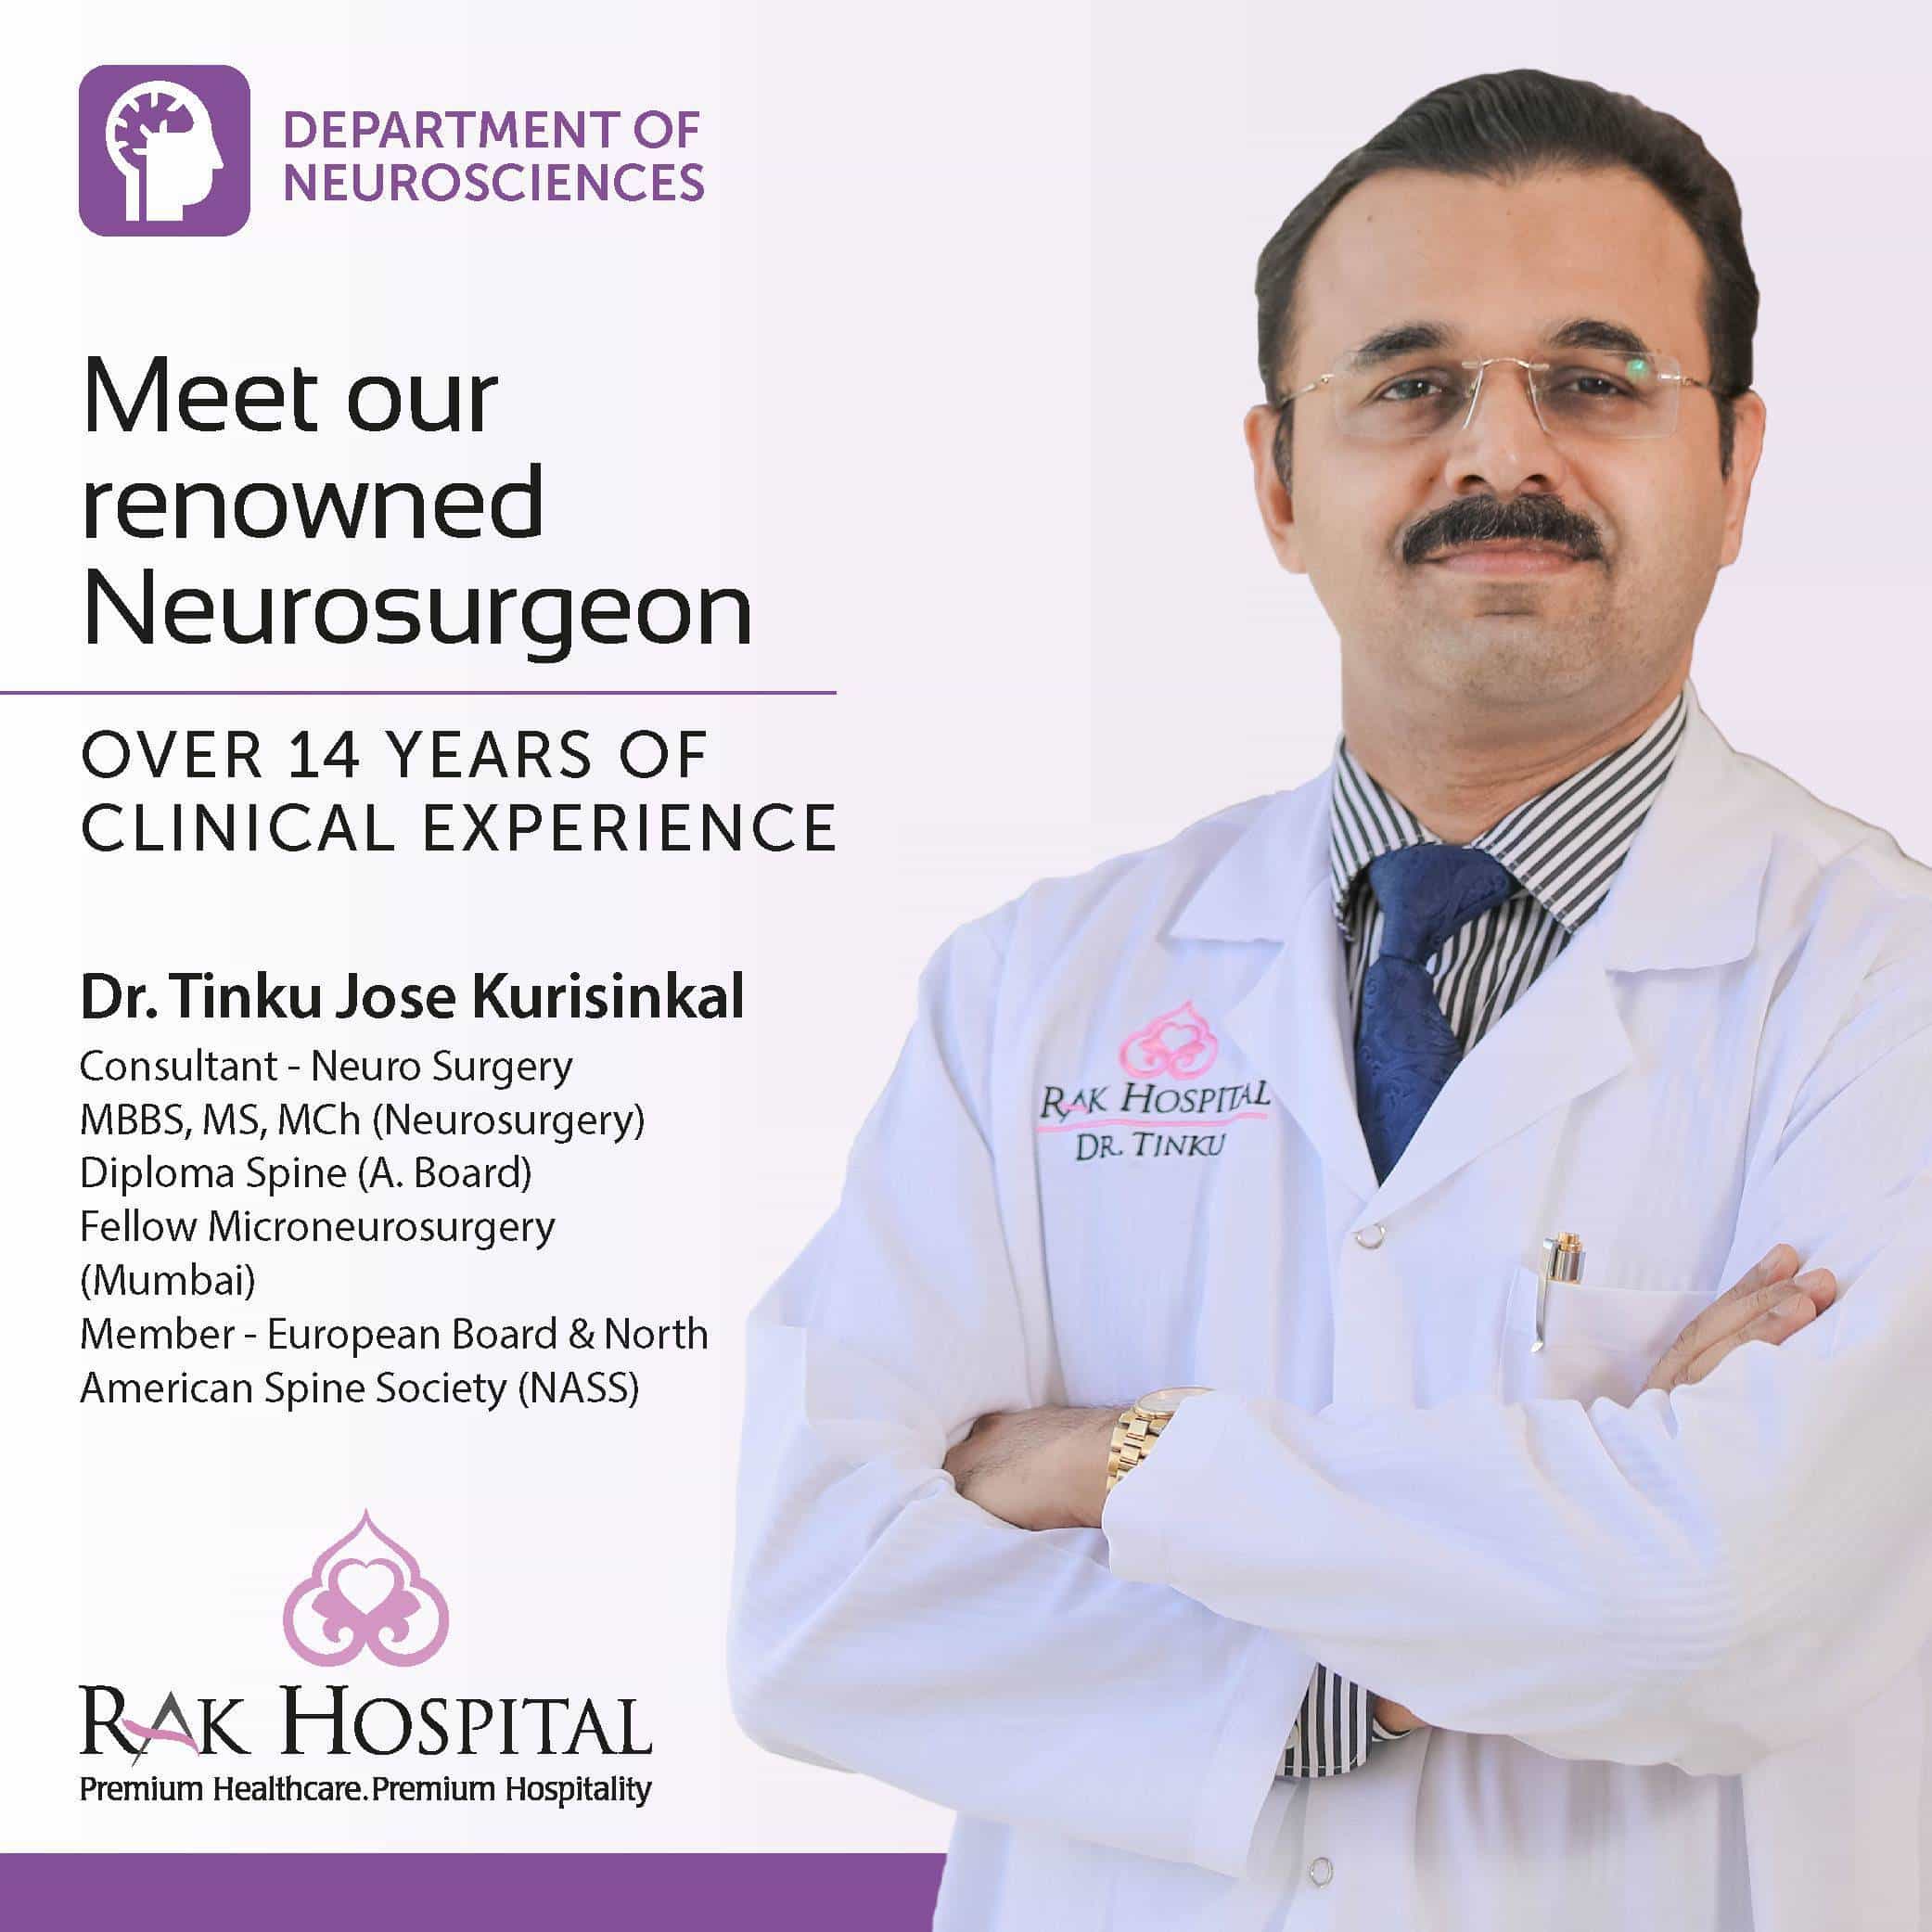 Meet our renowned Neurosurgeon Dr. Tinku Kurisinkal, Consultant - Neuro Surgery